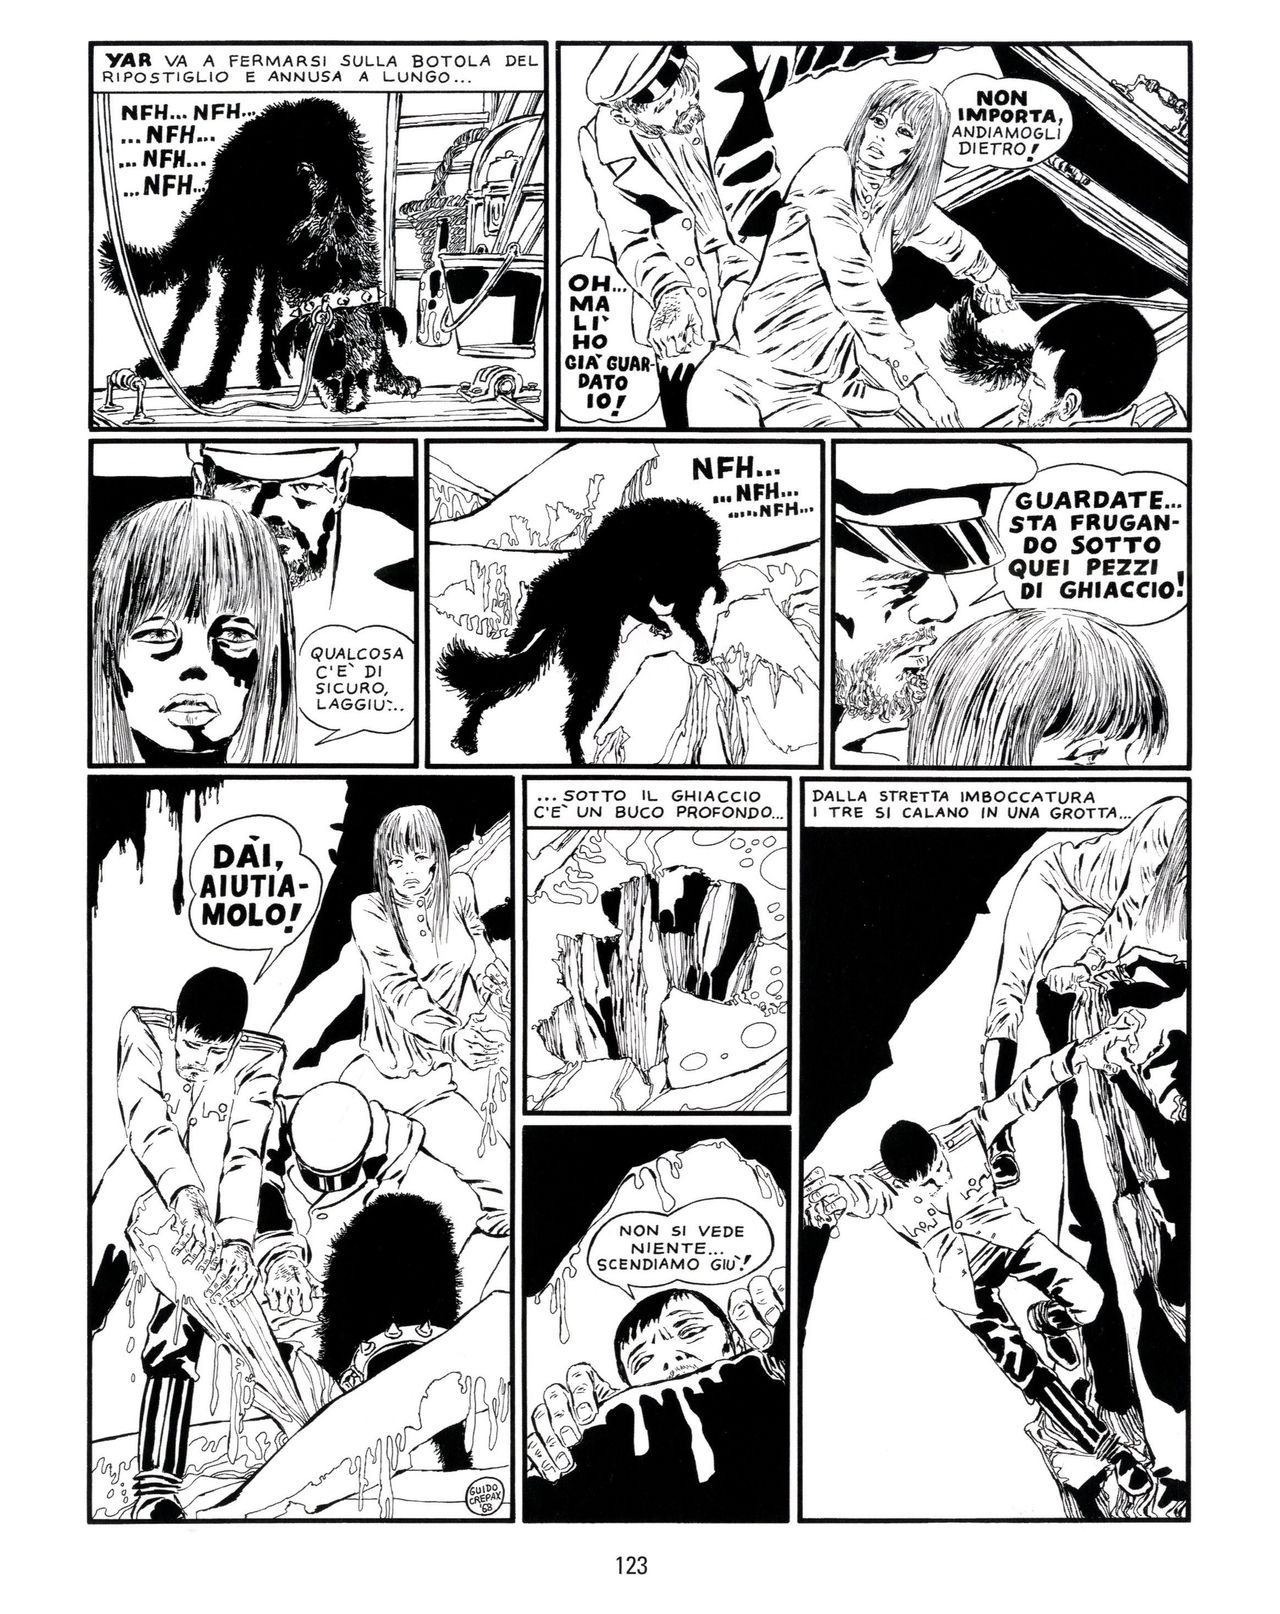 [Guido Crepax] Erotica Fumetti #25 : L'ascesa dei sotterranei : I cavalieri ciechi [Italian] 124